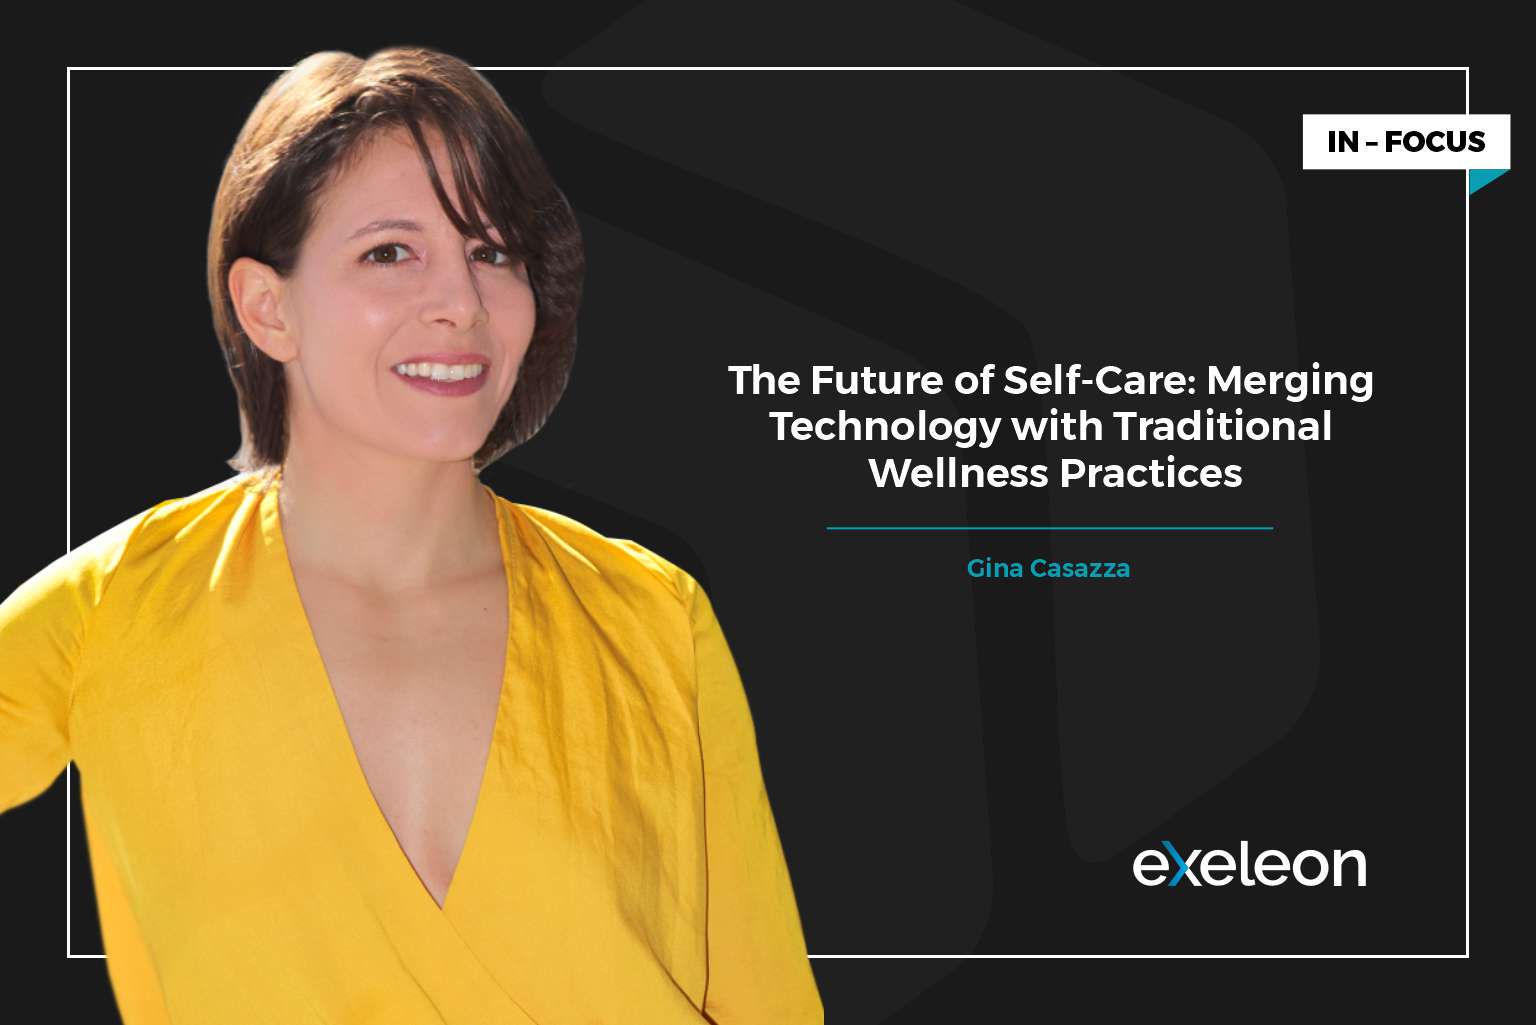 Gina Casazza on the future of Self Care